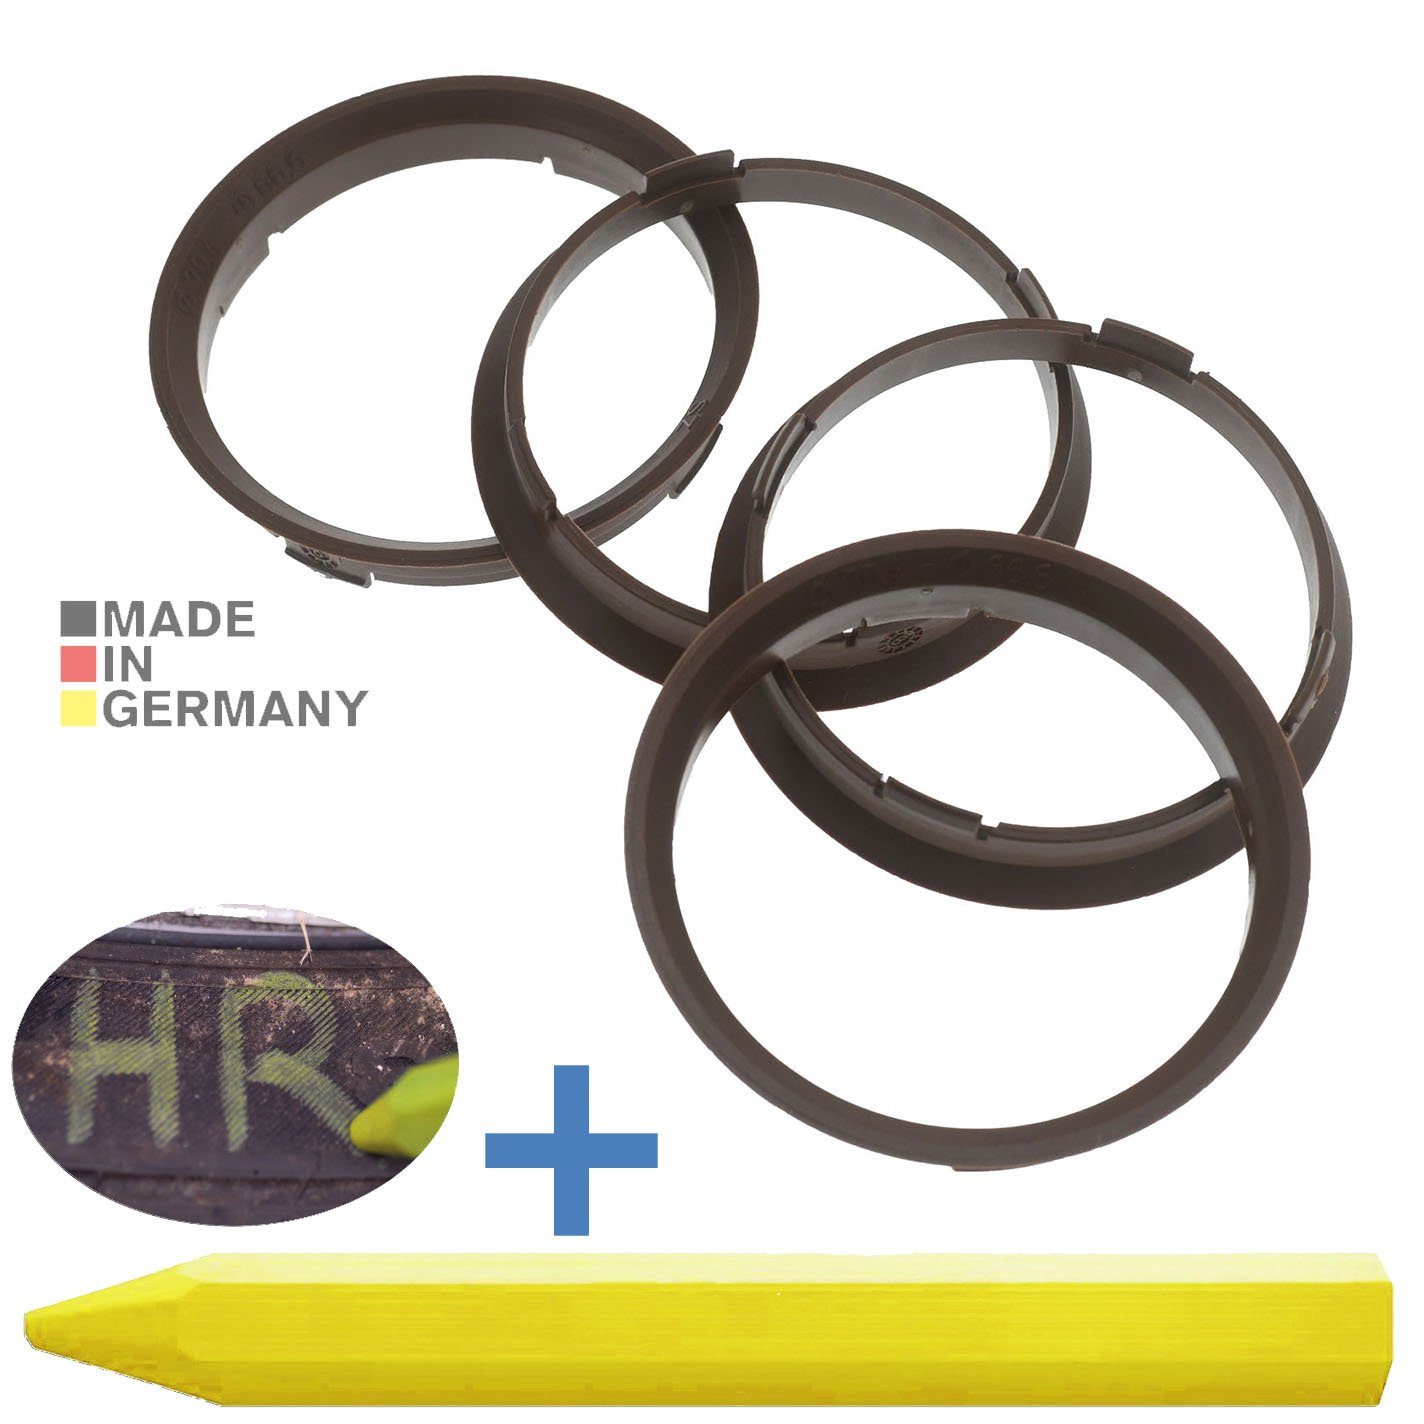 RKC Reifenstift 4X Zentrierringe Braun Felgen Ringe + 1x Reifen Kreide Fett Stift, Maße: 70,4 x 66,6 mm